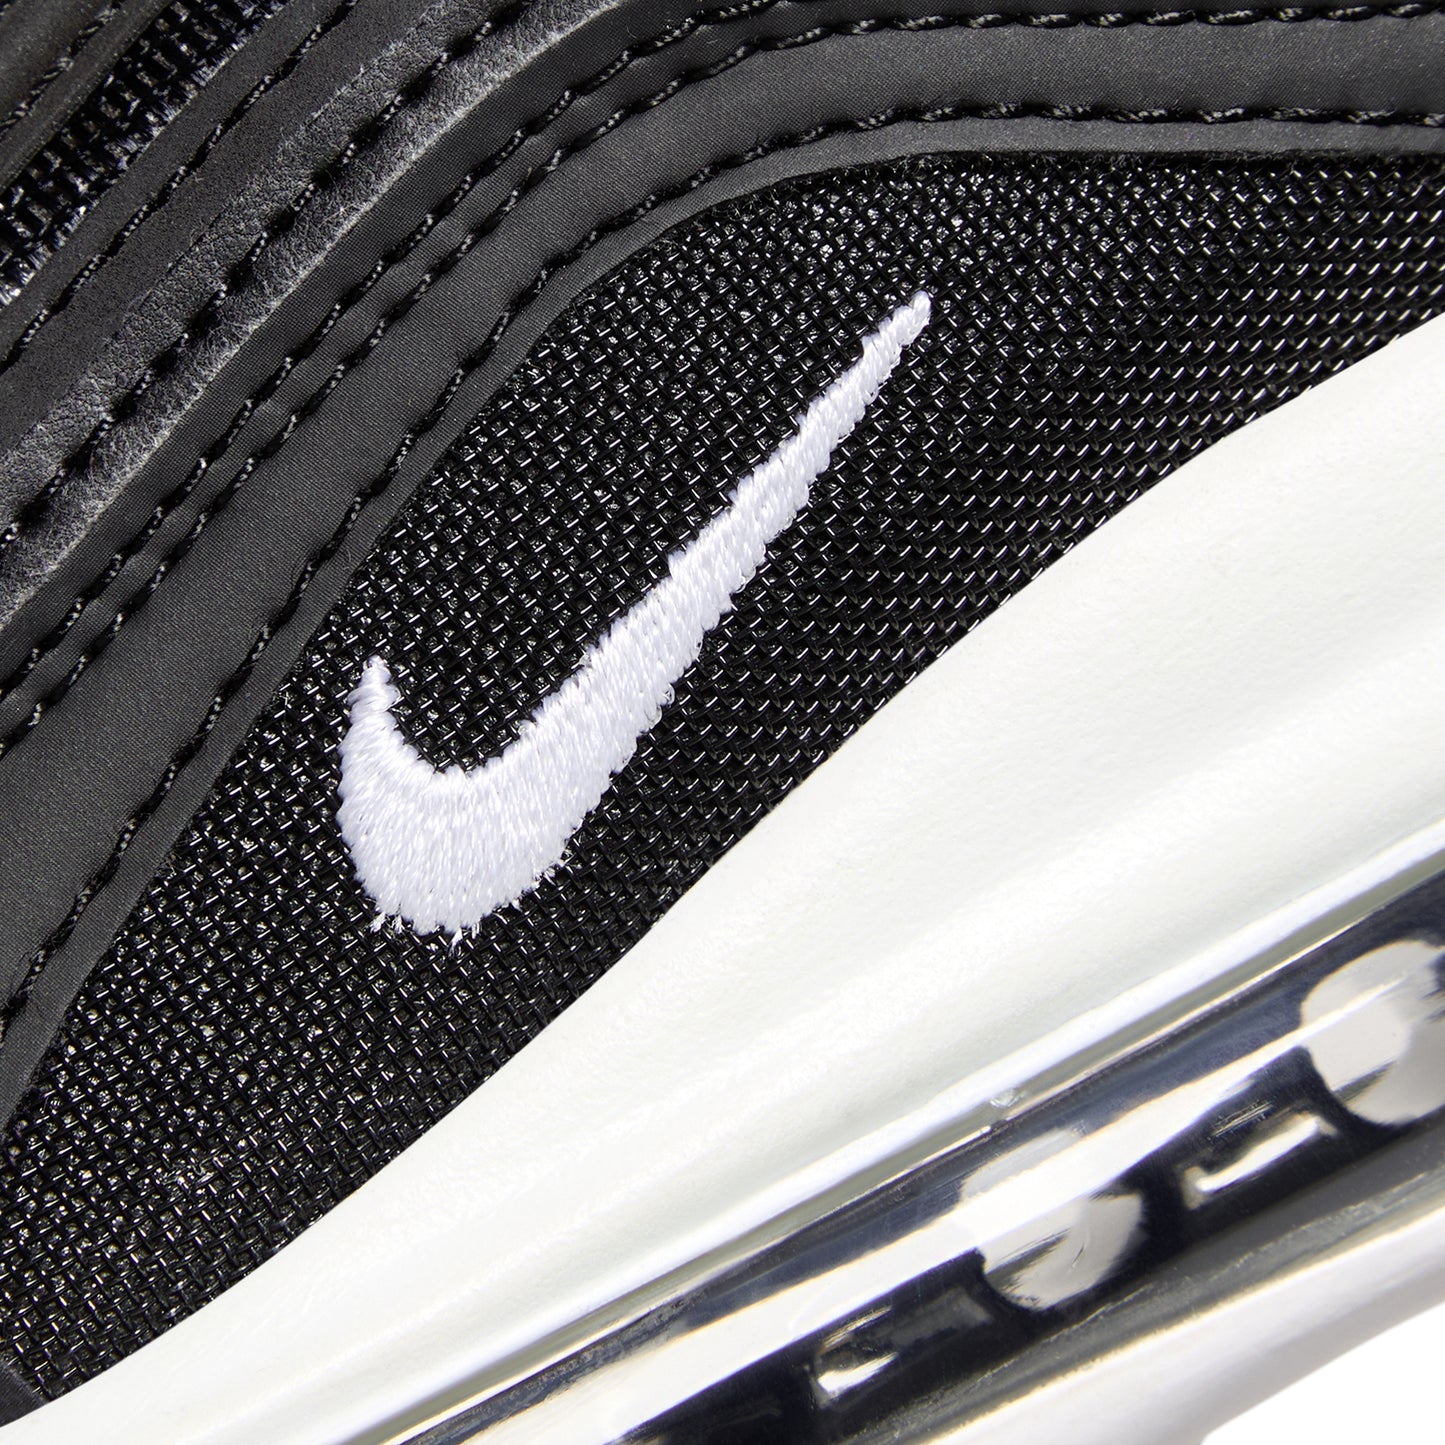 Nike Air Max 97 (Black/White)